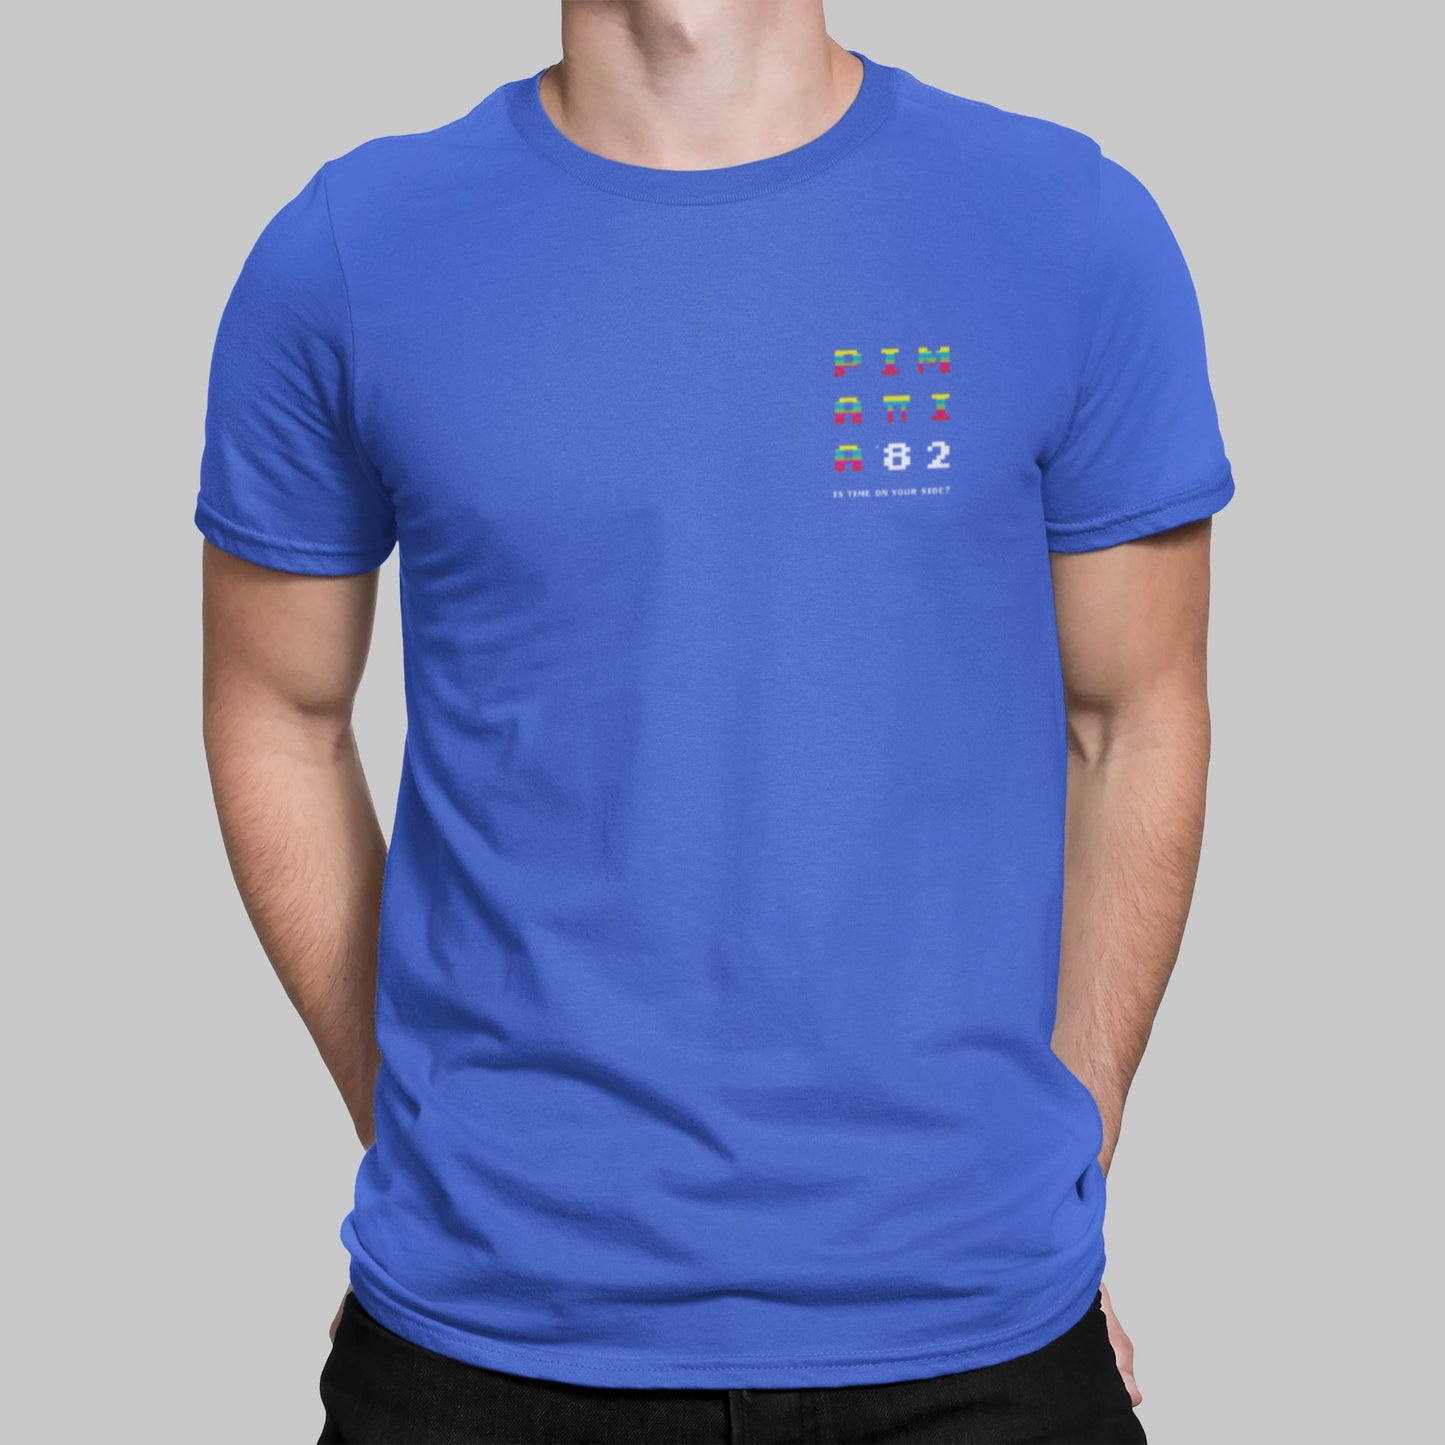 Pimania 82 Pocket Print Retro Gaming T-Shirt T-Shirt Seven Squared Small 34-36" Royal Blue 